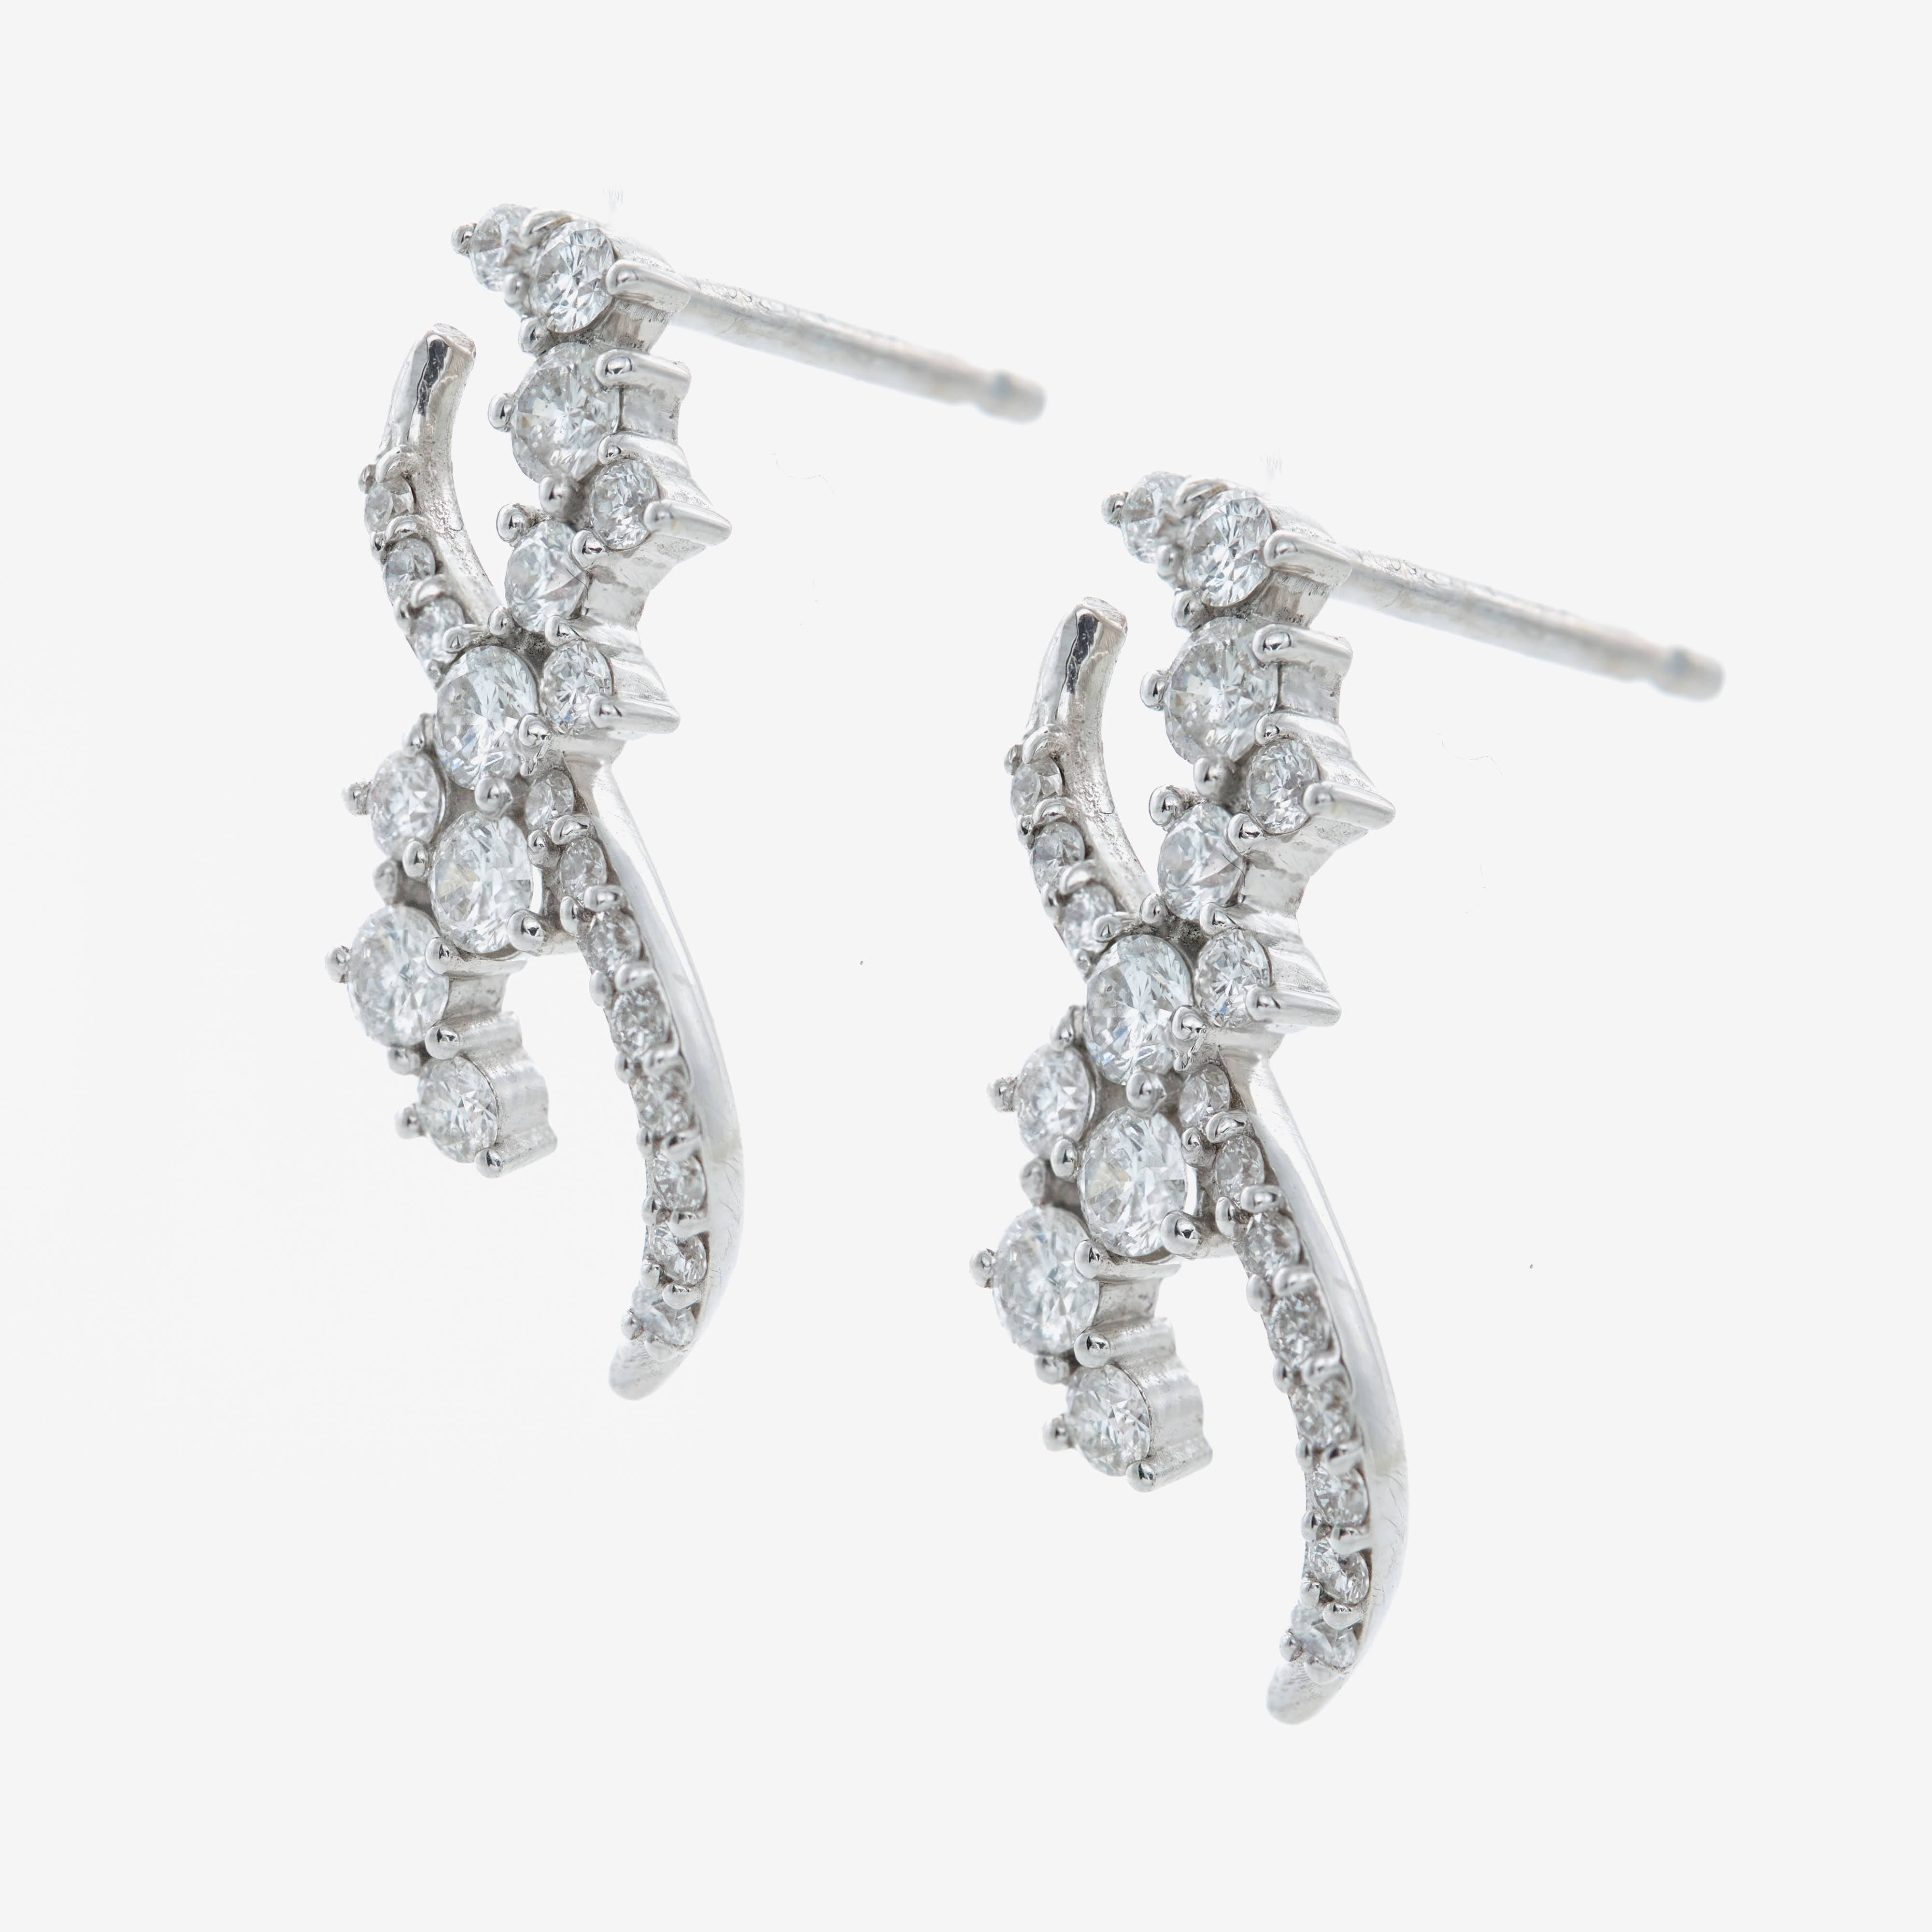 Nayan diamond earrings